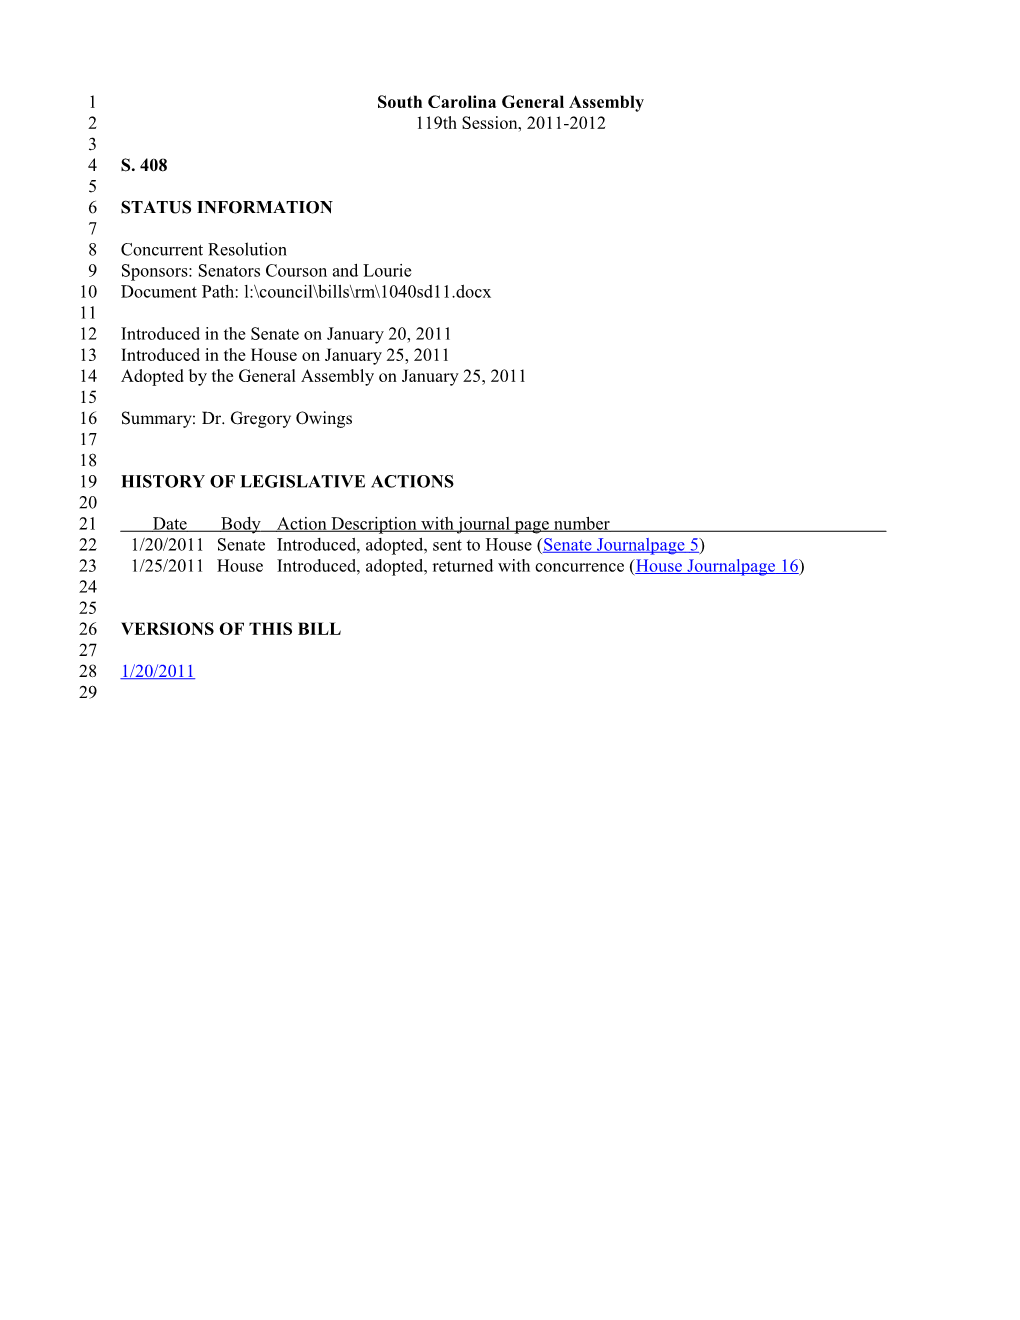 2011-2012 Bill 408: Dr. Gregory Owings - South Carolina Legislature Online